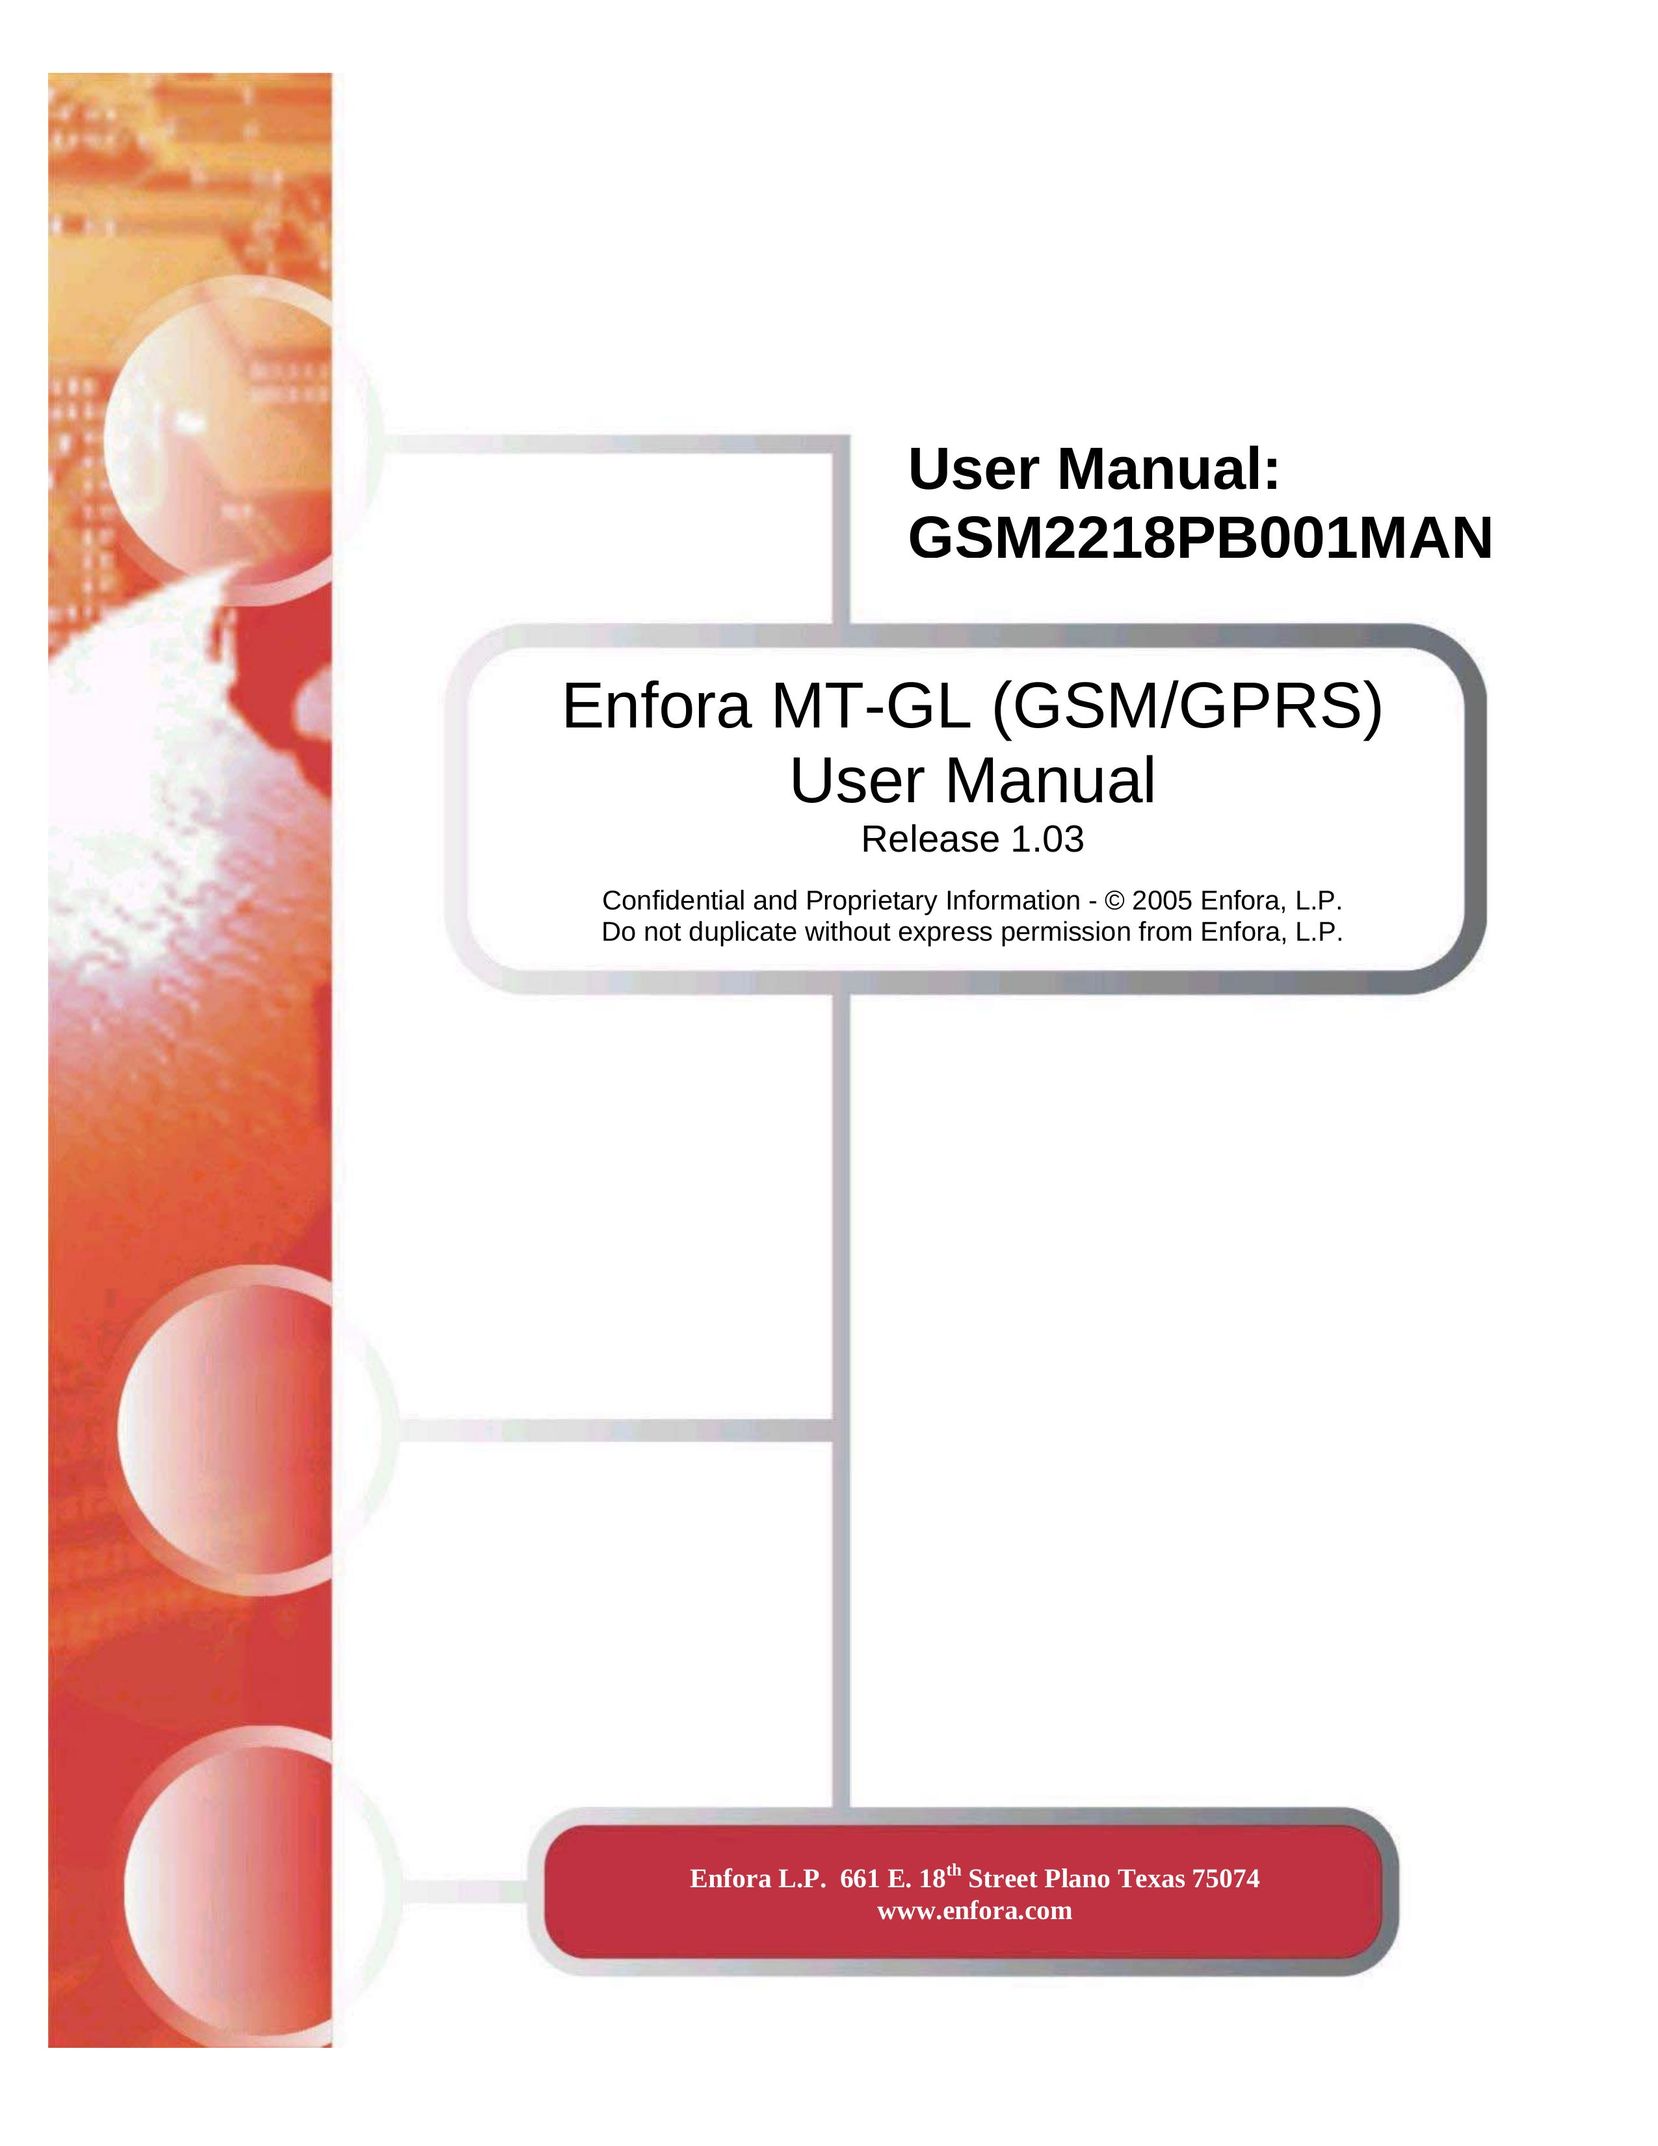 Enfora GSM2218PB001MAN Network Card User Manual